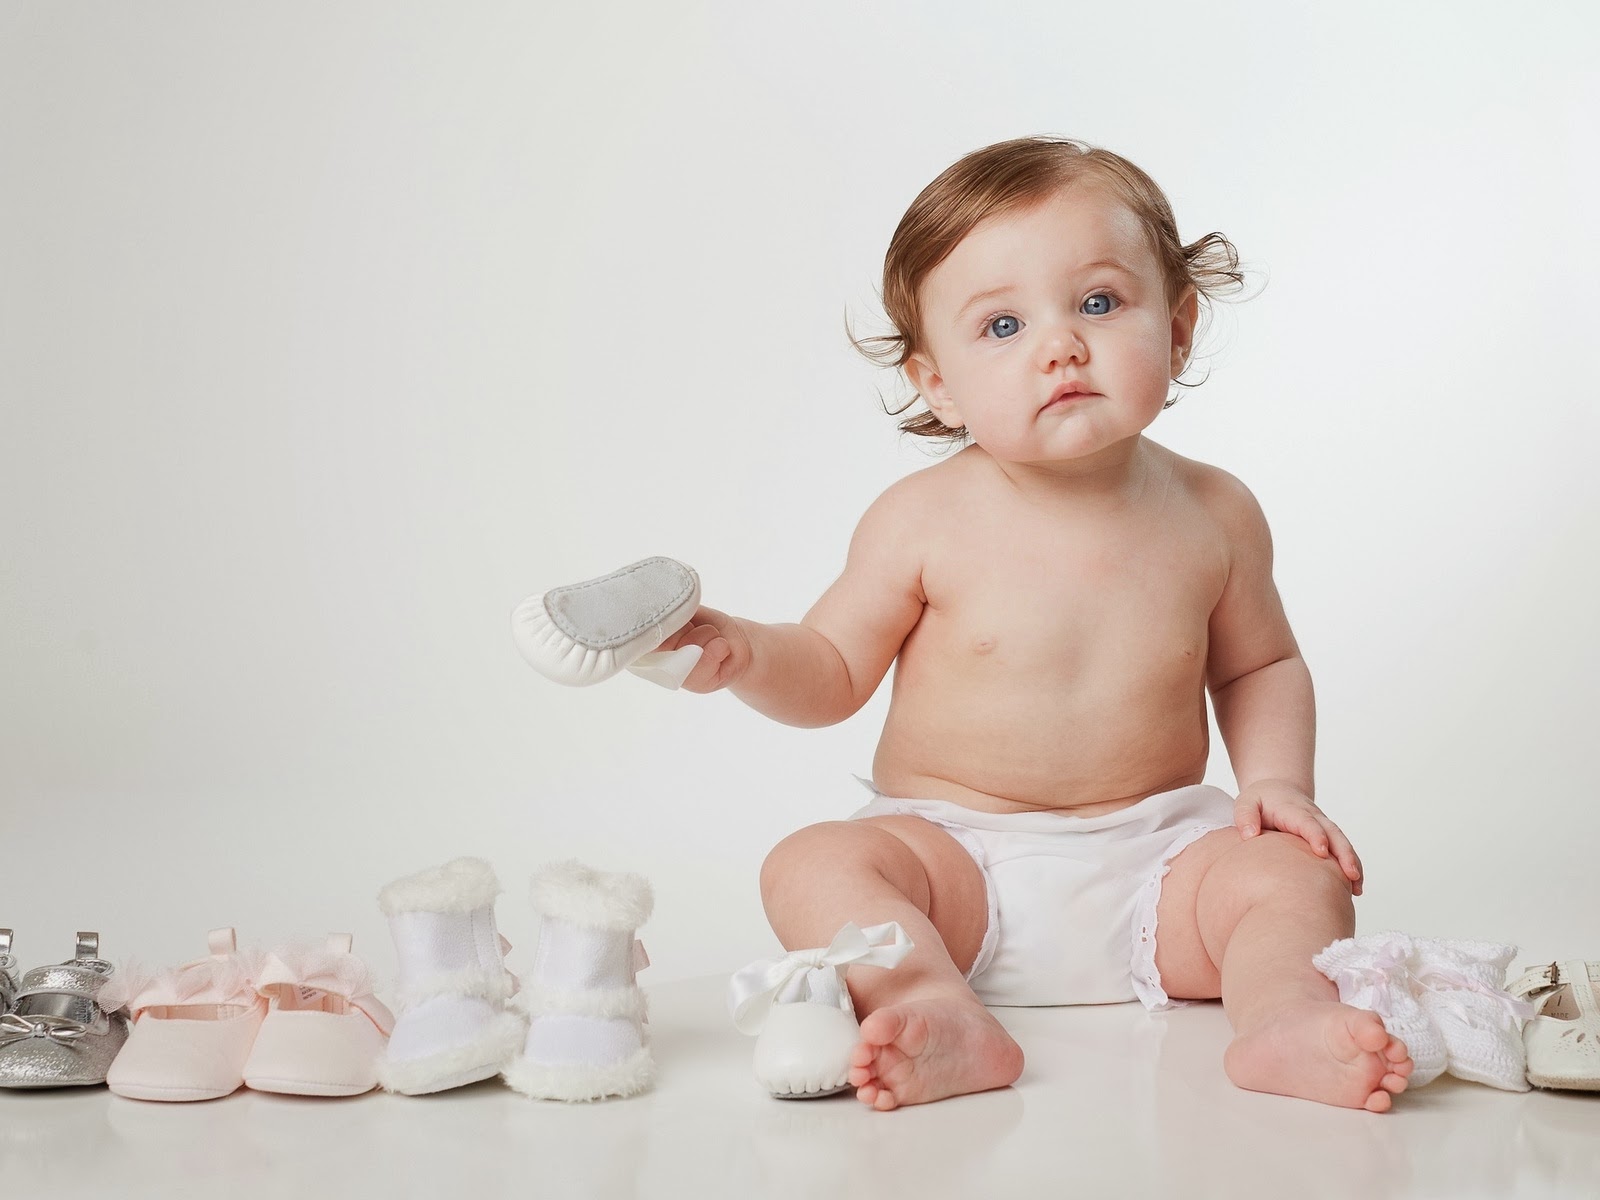 Calzado para niños: zapatos para bebés